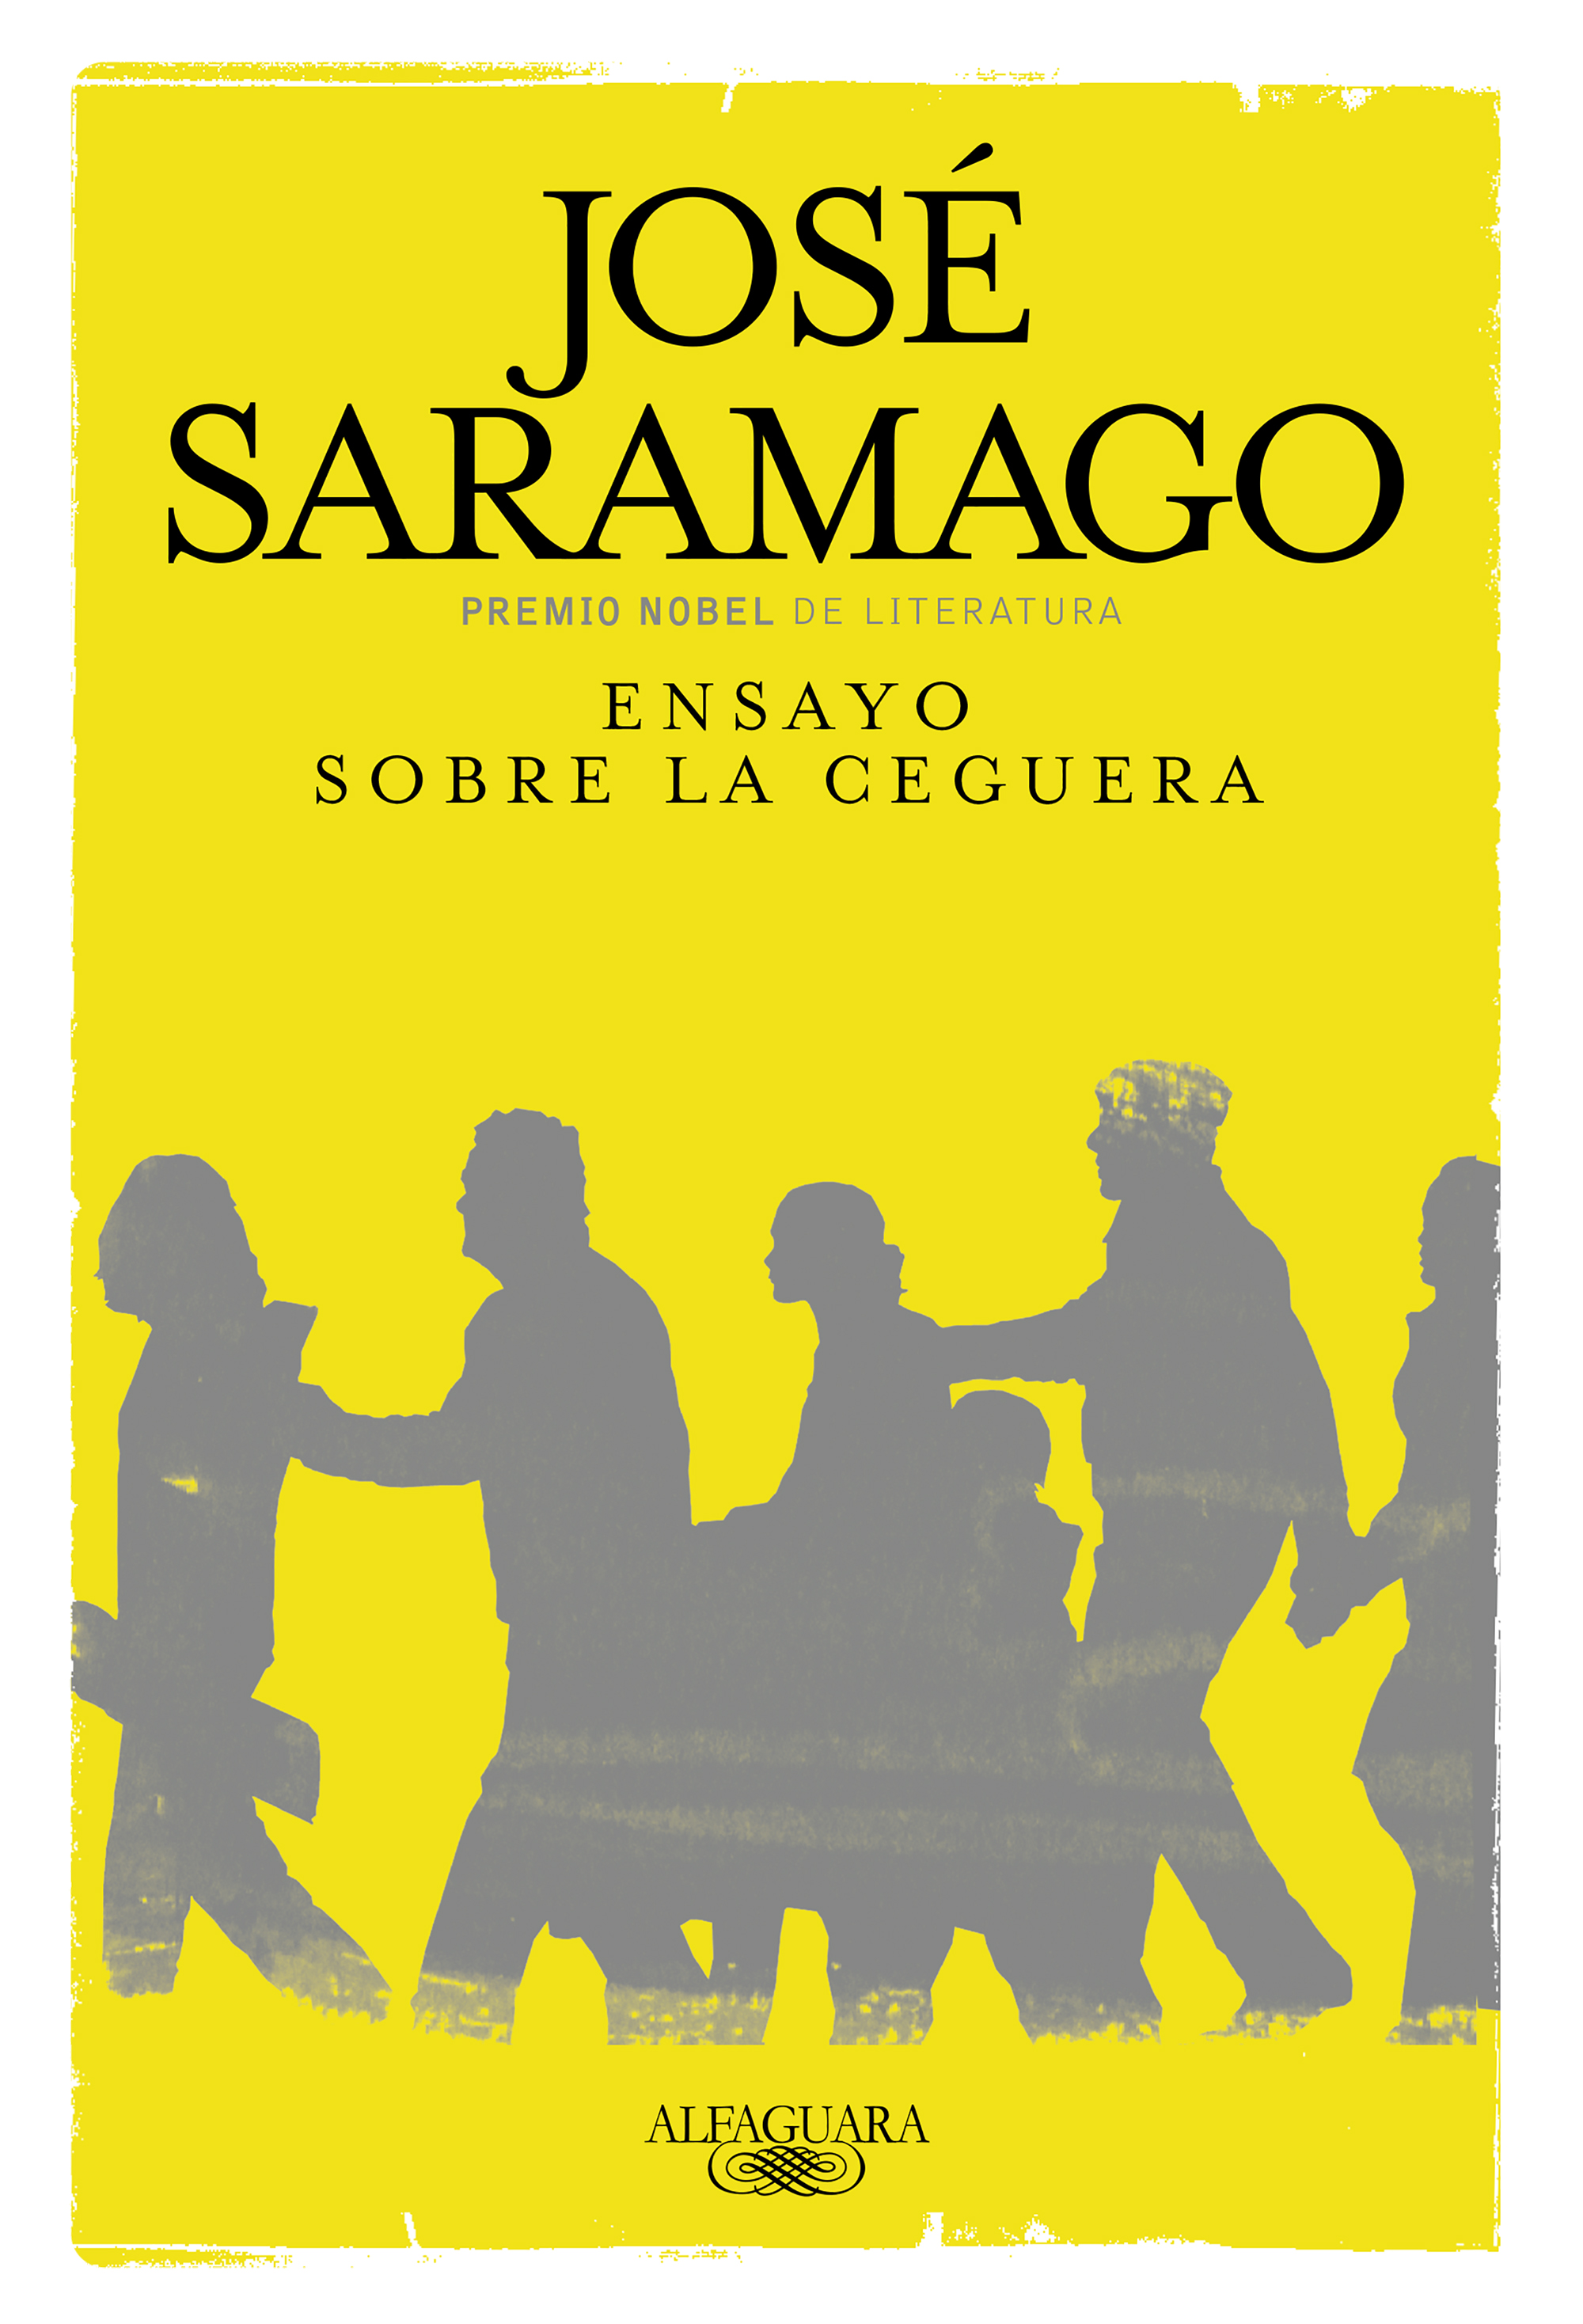 Book cover of Ensayo sobre la ceguera